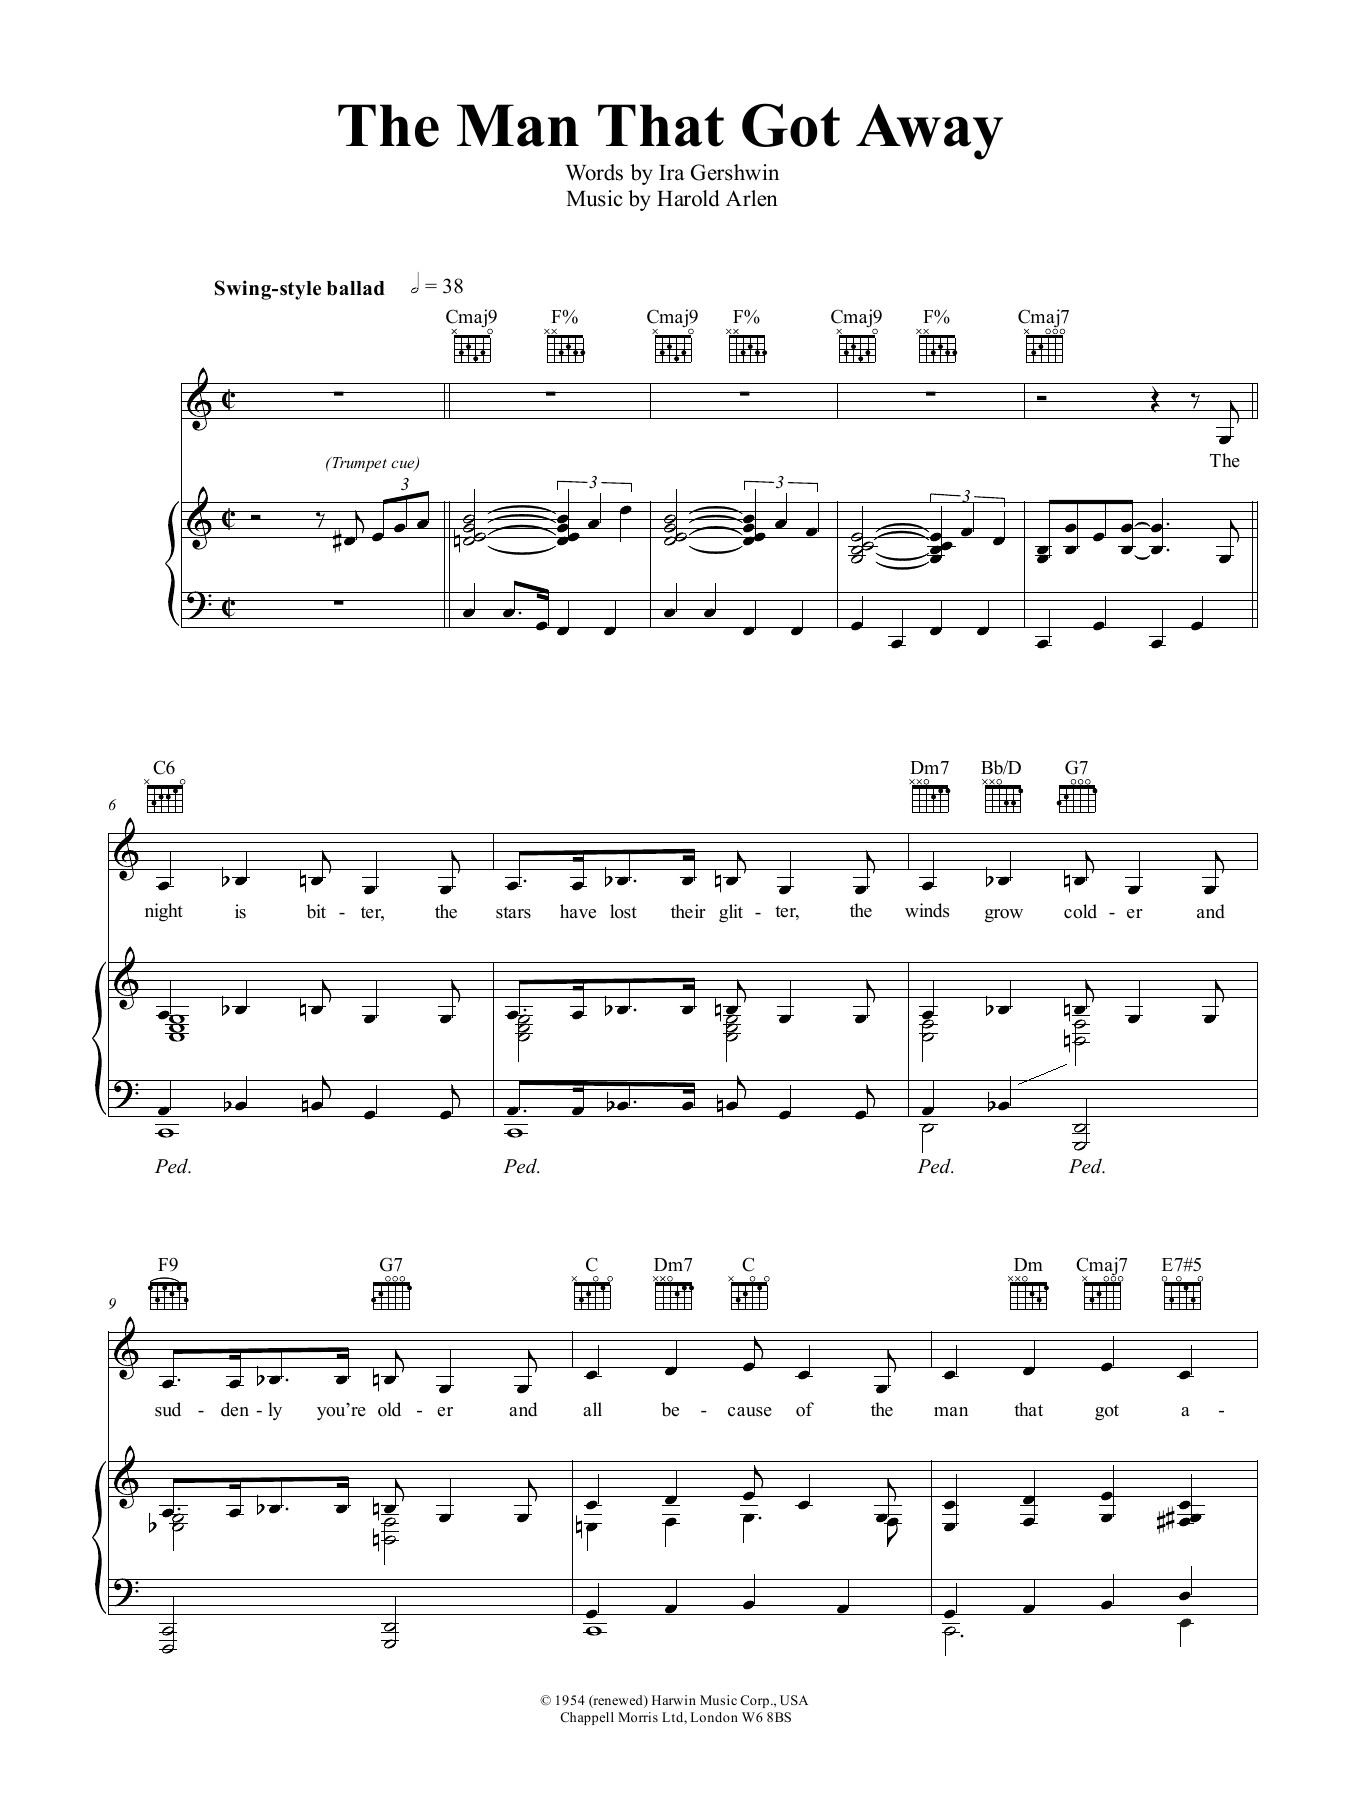 Harold Arlen The Man That Got Away Sheet Music Notes & Chords for Piano - Download or Print PDF